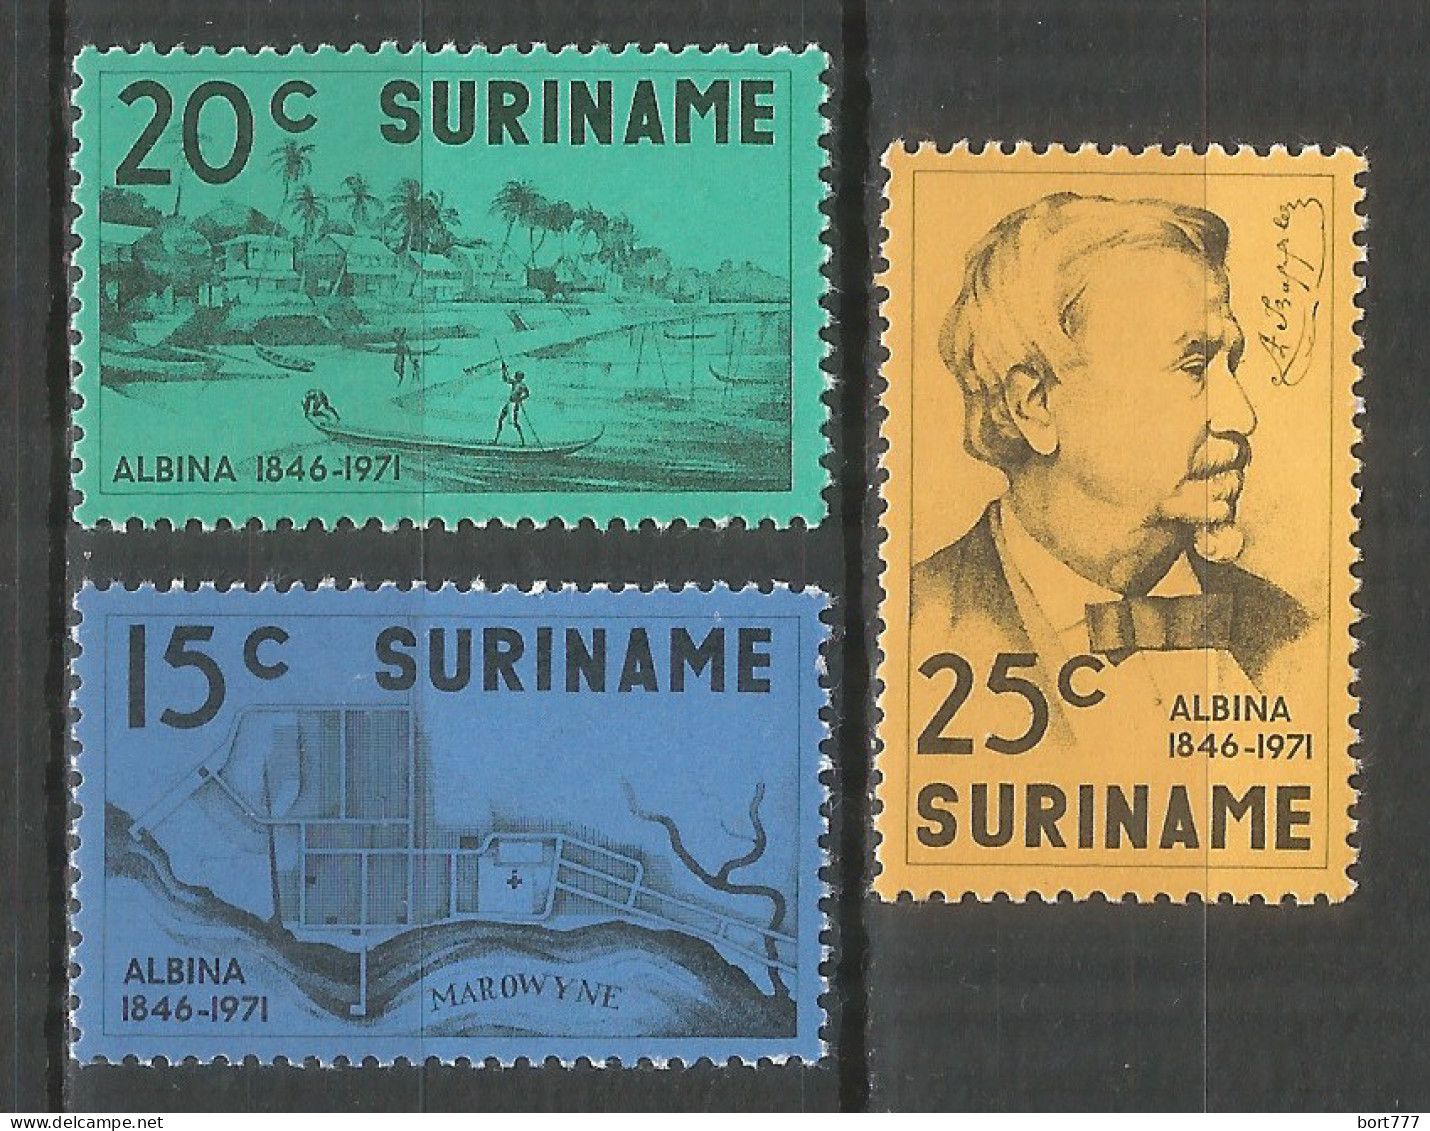 Surinam 1971 Mint Stamps Set MNH (**)  - Suriname